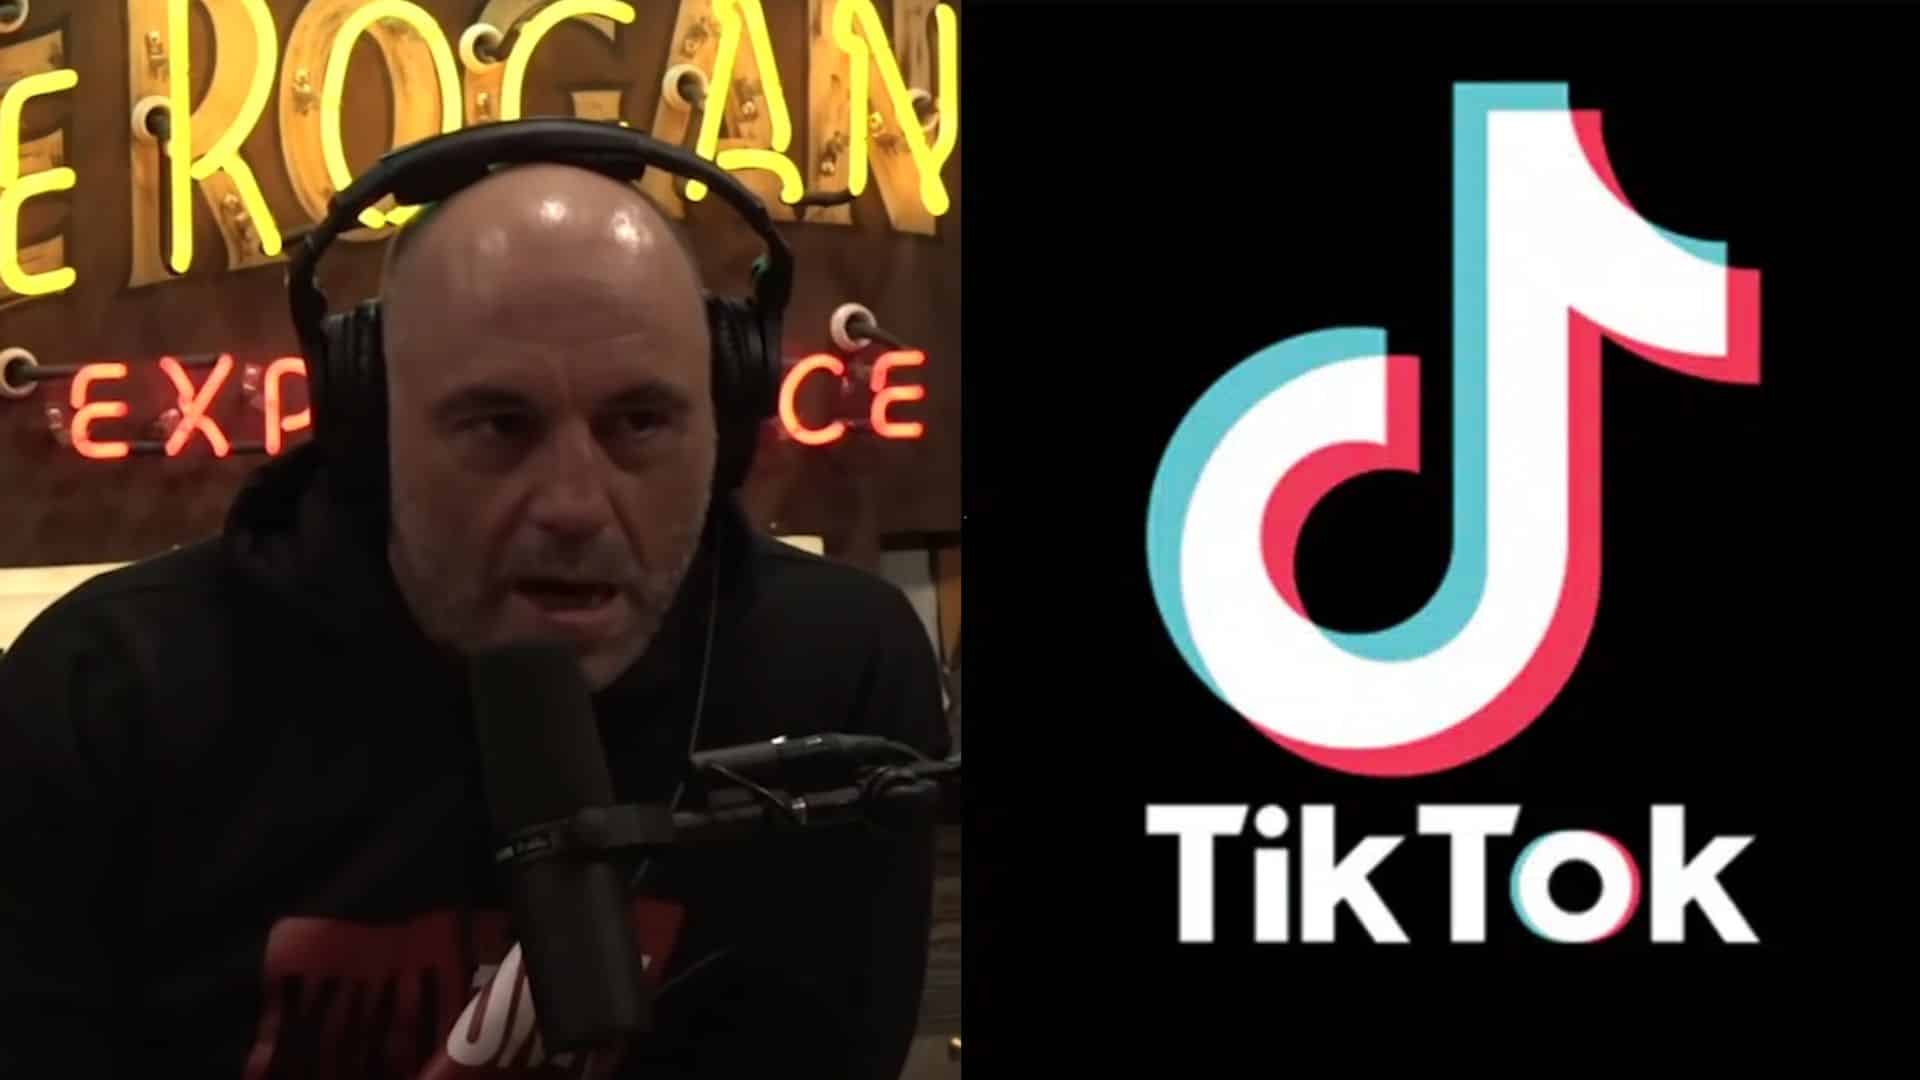 Joe Rogan alongside TikTok logo talking on podcast